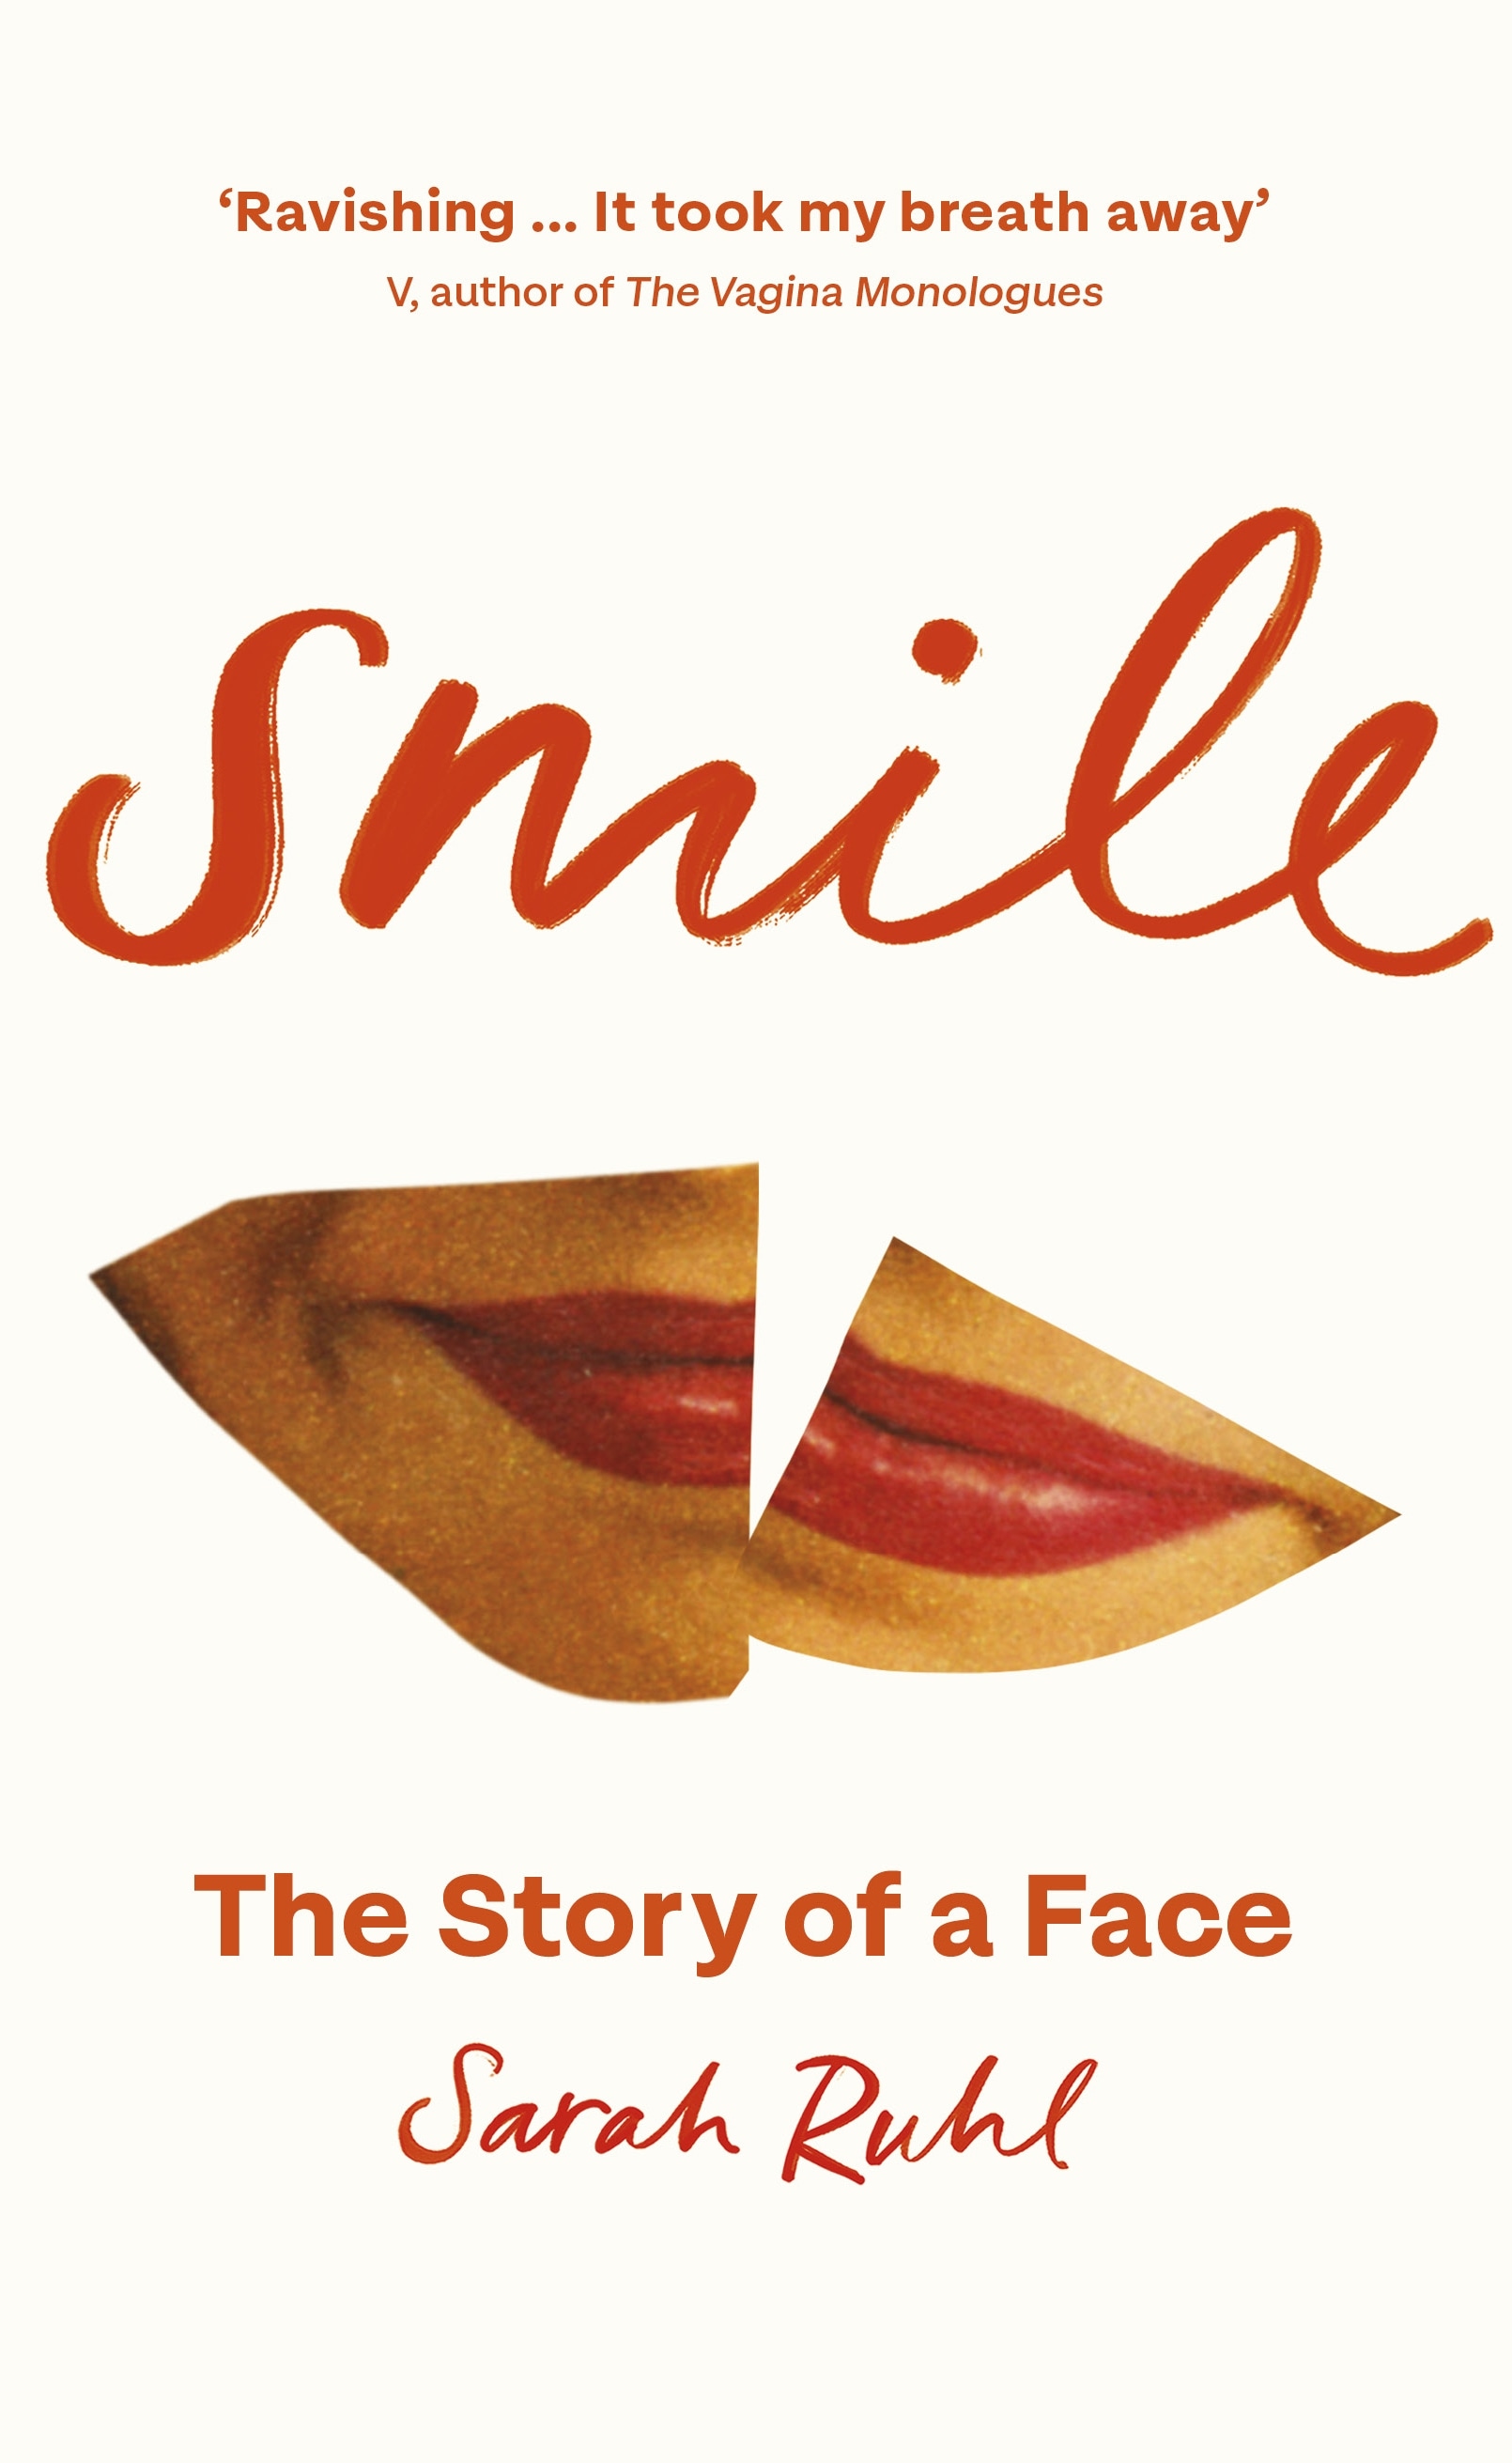 Book “Smile” by Sarah Ruhl — January 13, 2022